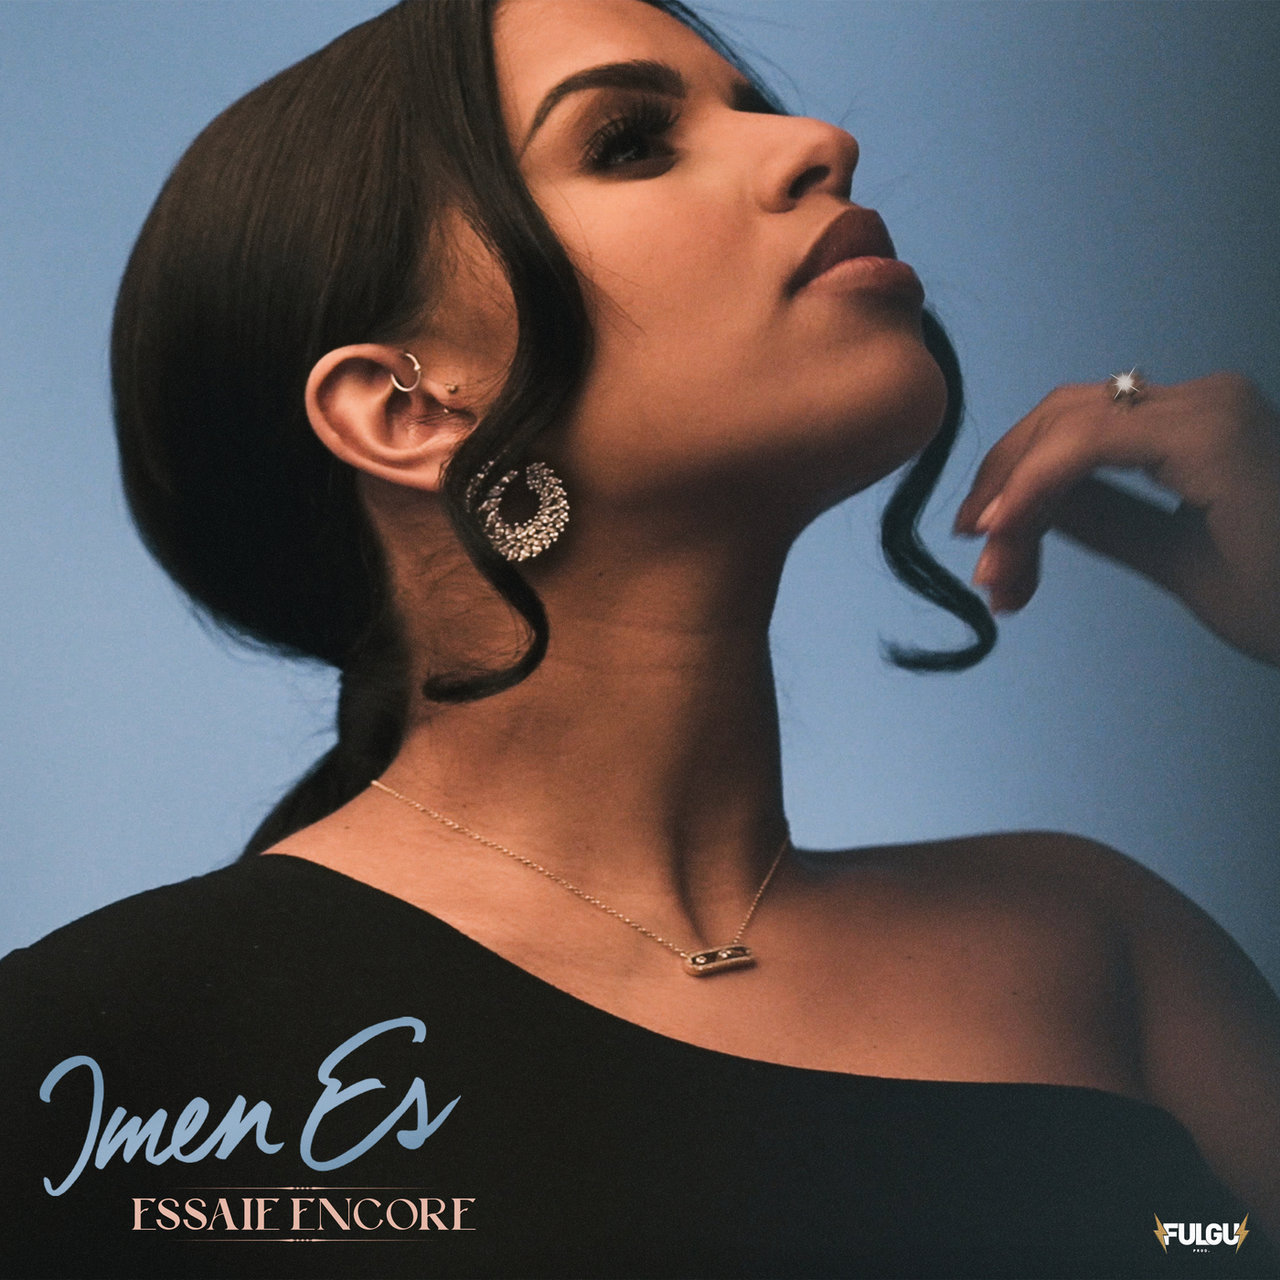 Imen ES - Essaie Encore (Cover)